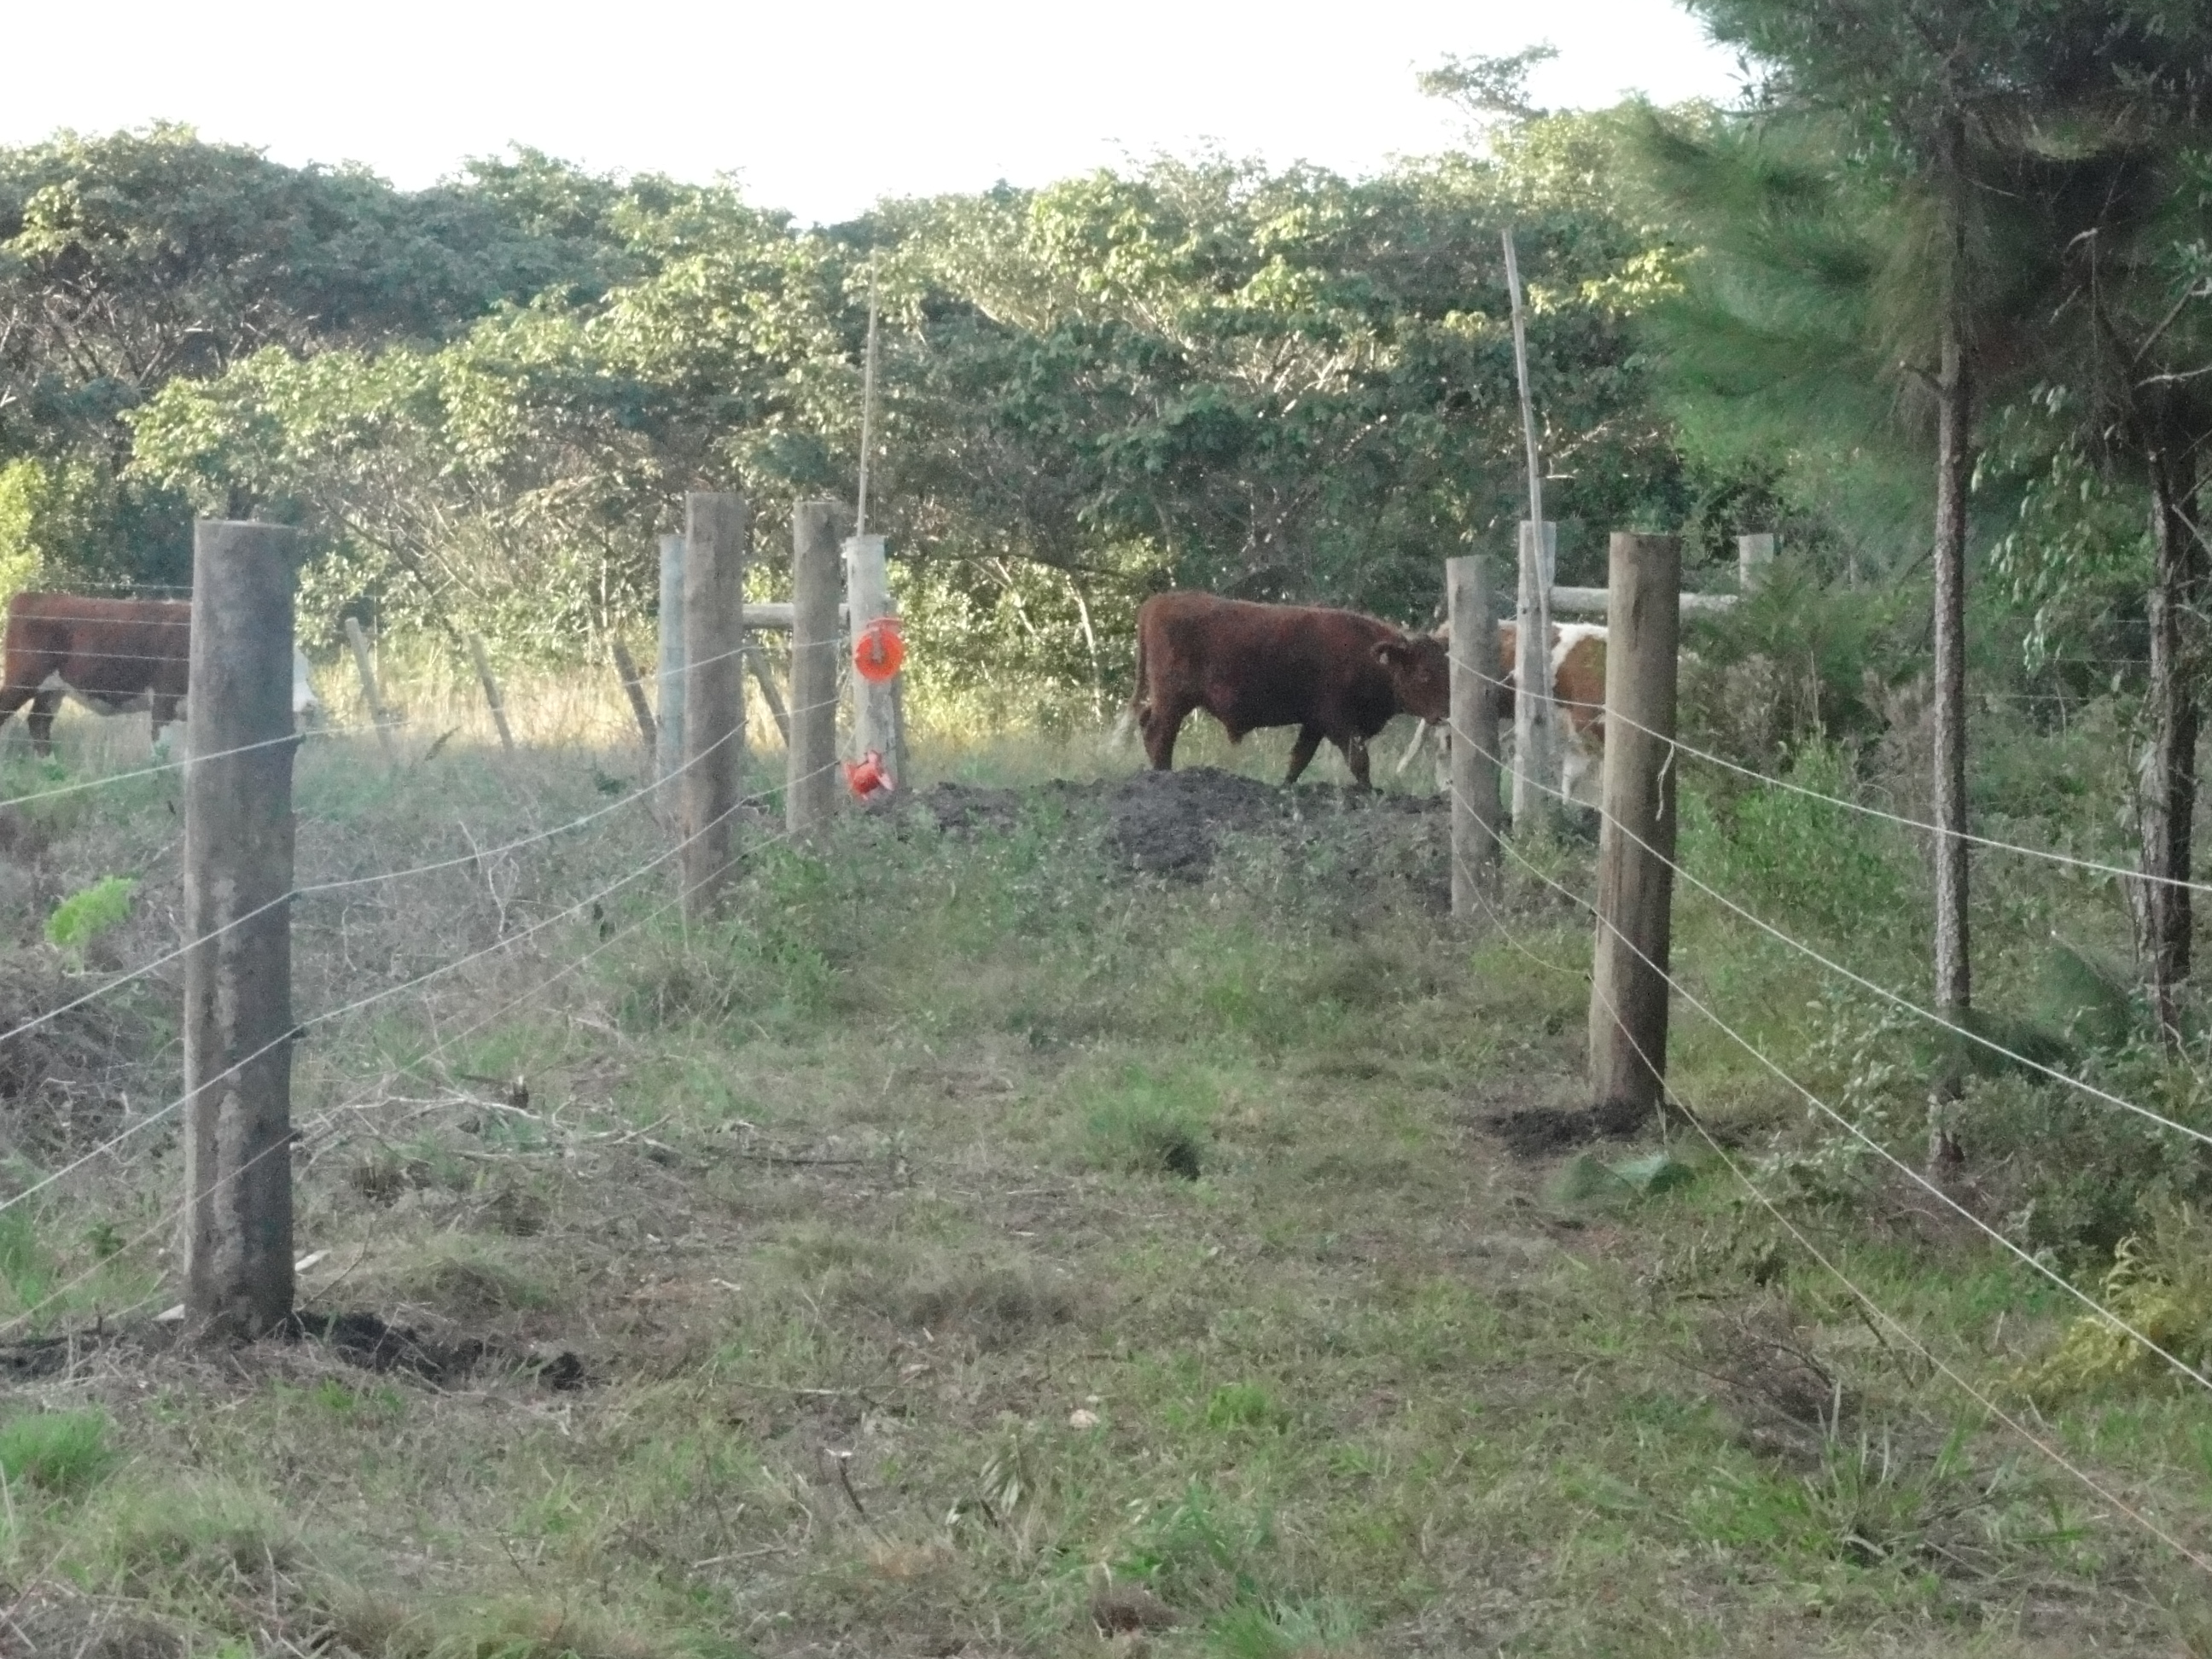 20120530 Fazenda Pontilhão bovinos ingazeiros cerca elétrica 001.jpg